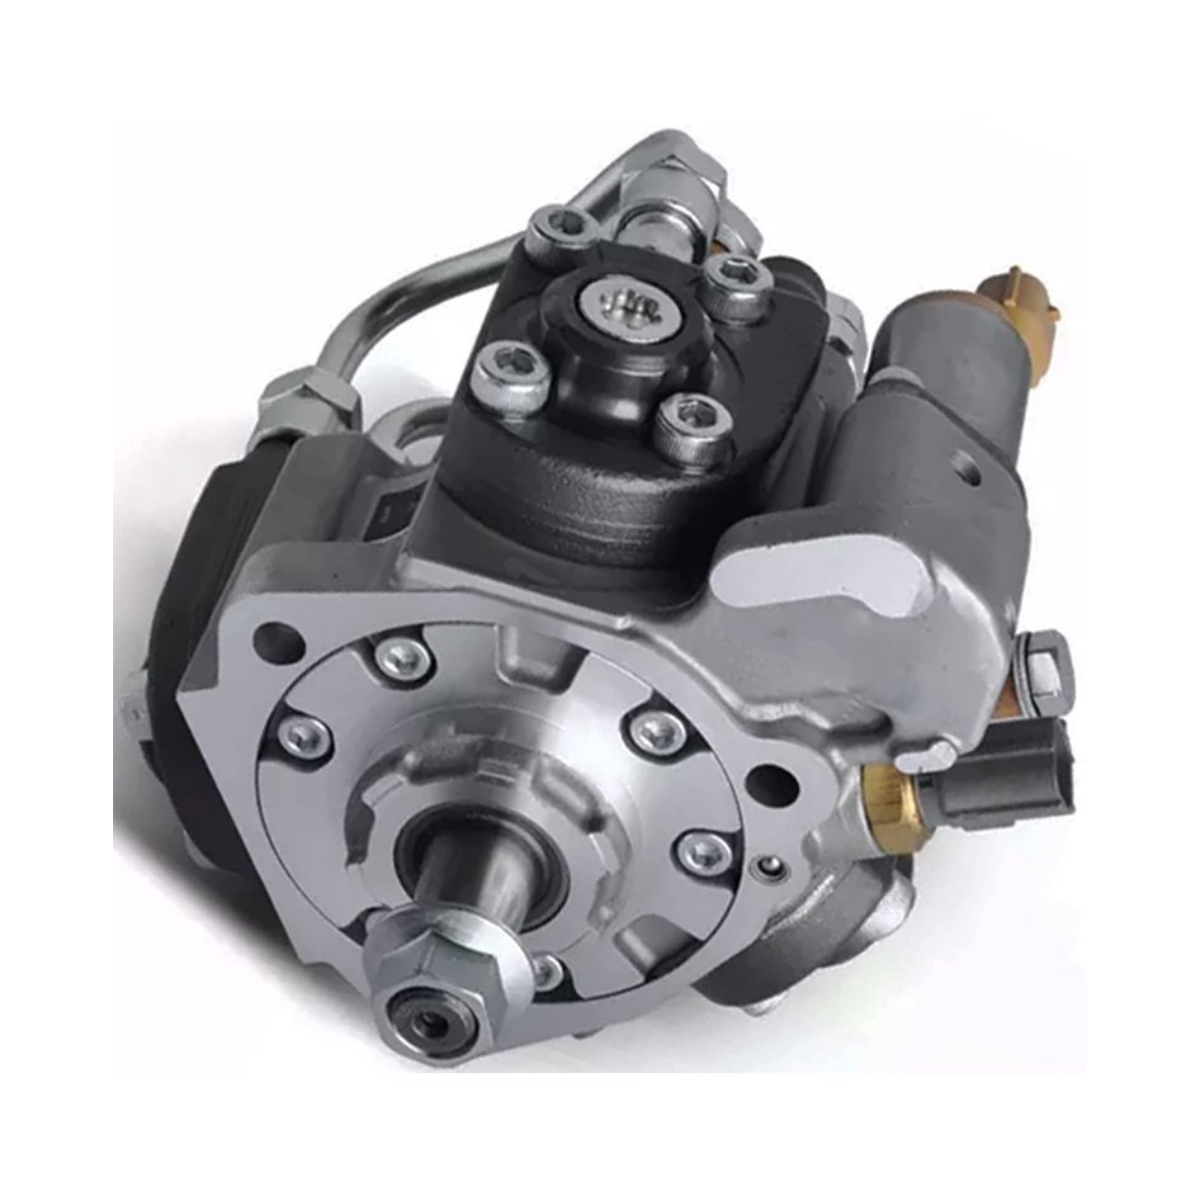 VH22100-E0532 294050-0940 Fuel Injection Pump for Hino J08E 500 - Sinocmp